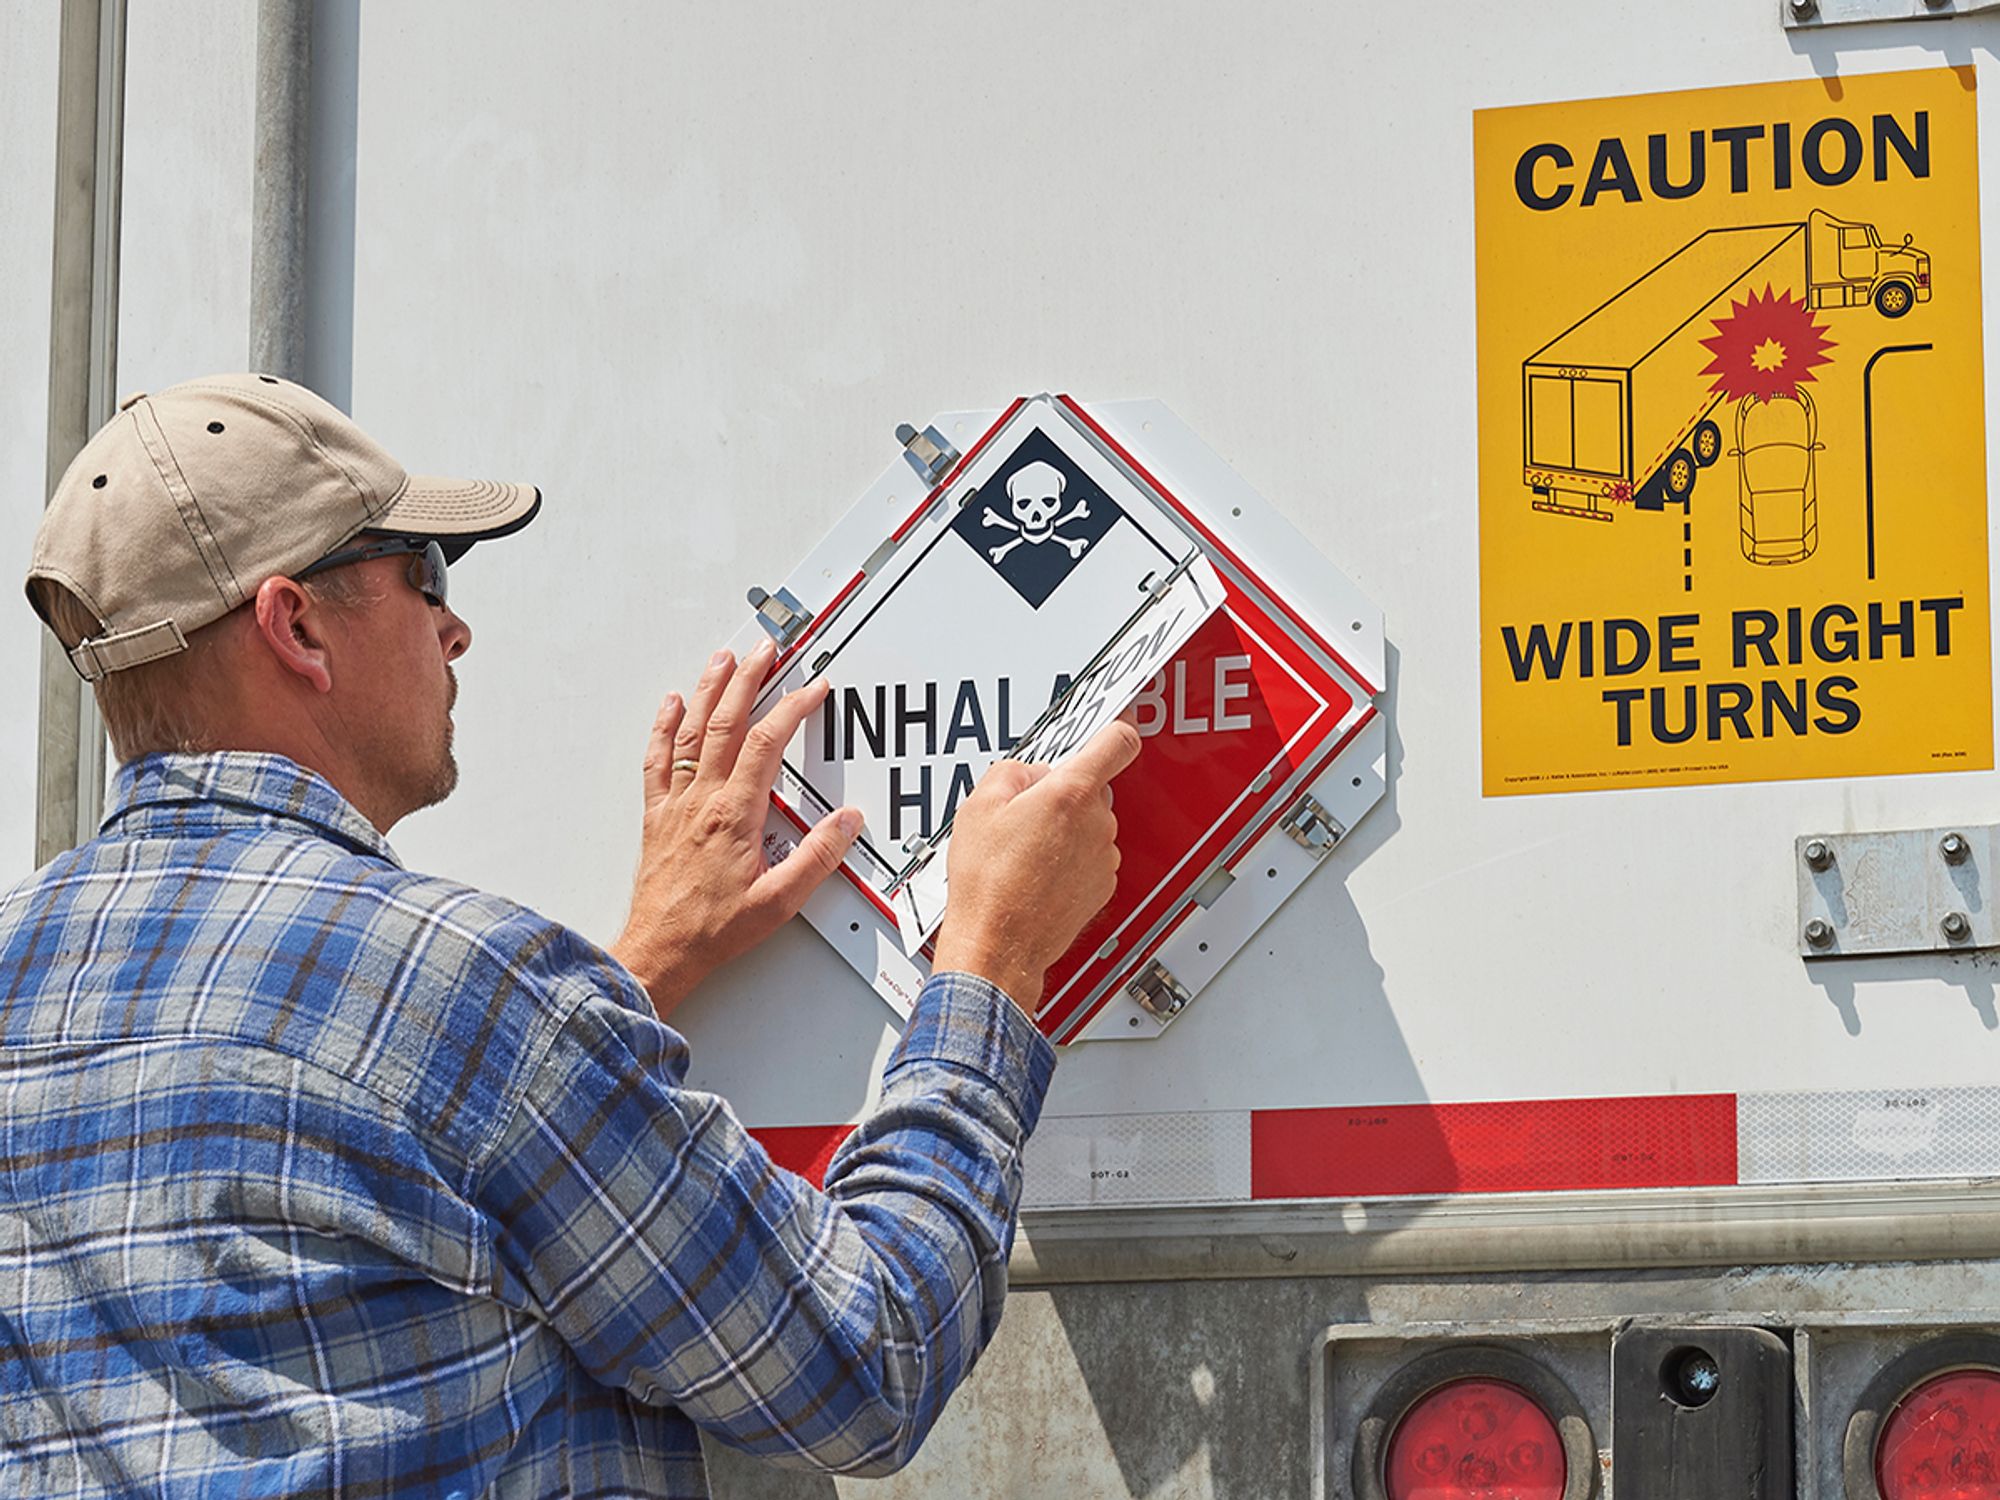 Markings for hazardous wastes, orientation arrow markings, and inhalation hazards